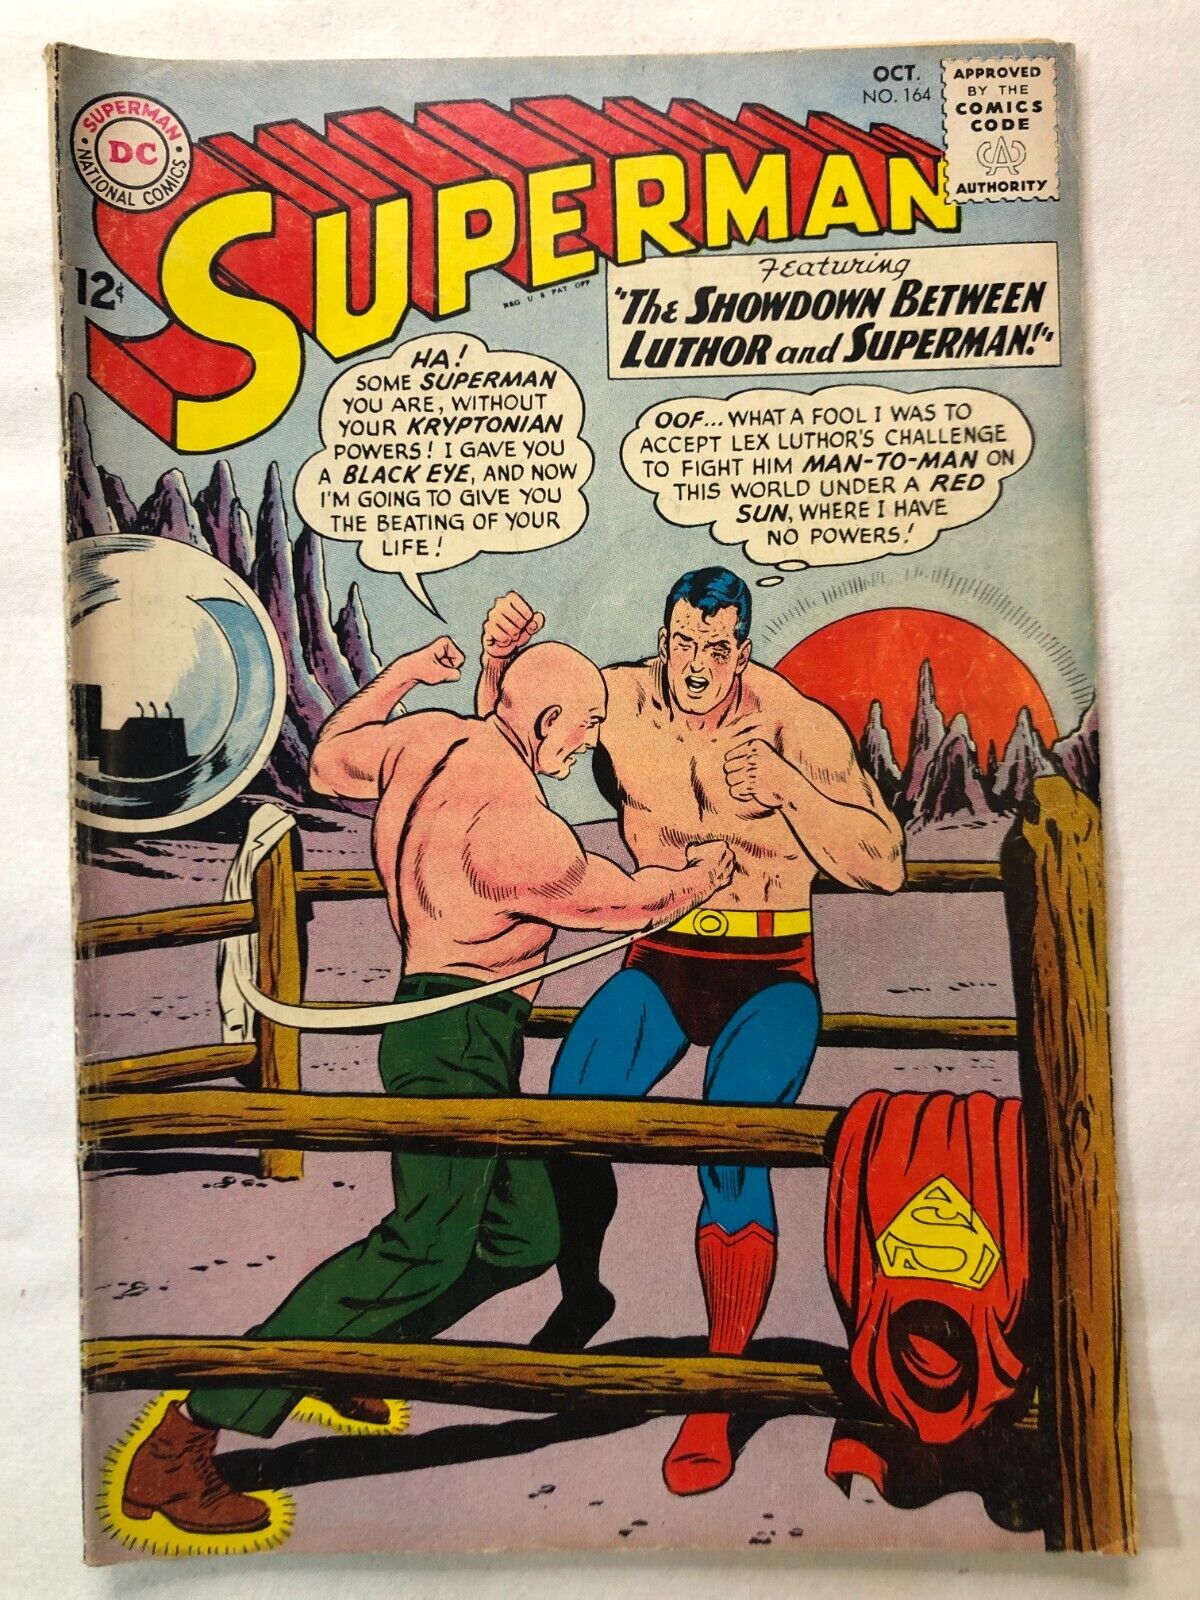 Superman #164 DC Comics Oct 1963 Nice Vintage Collectable